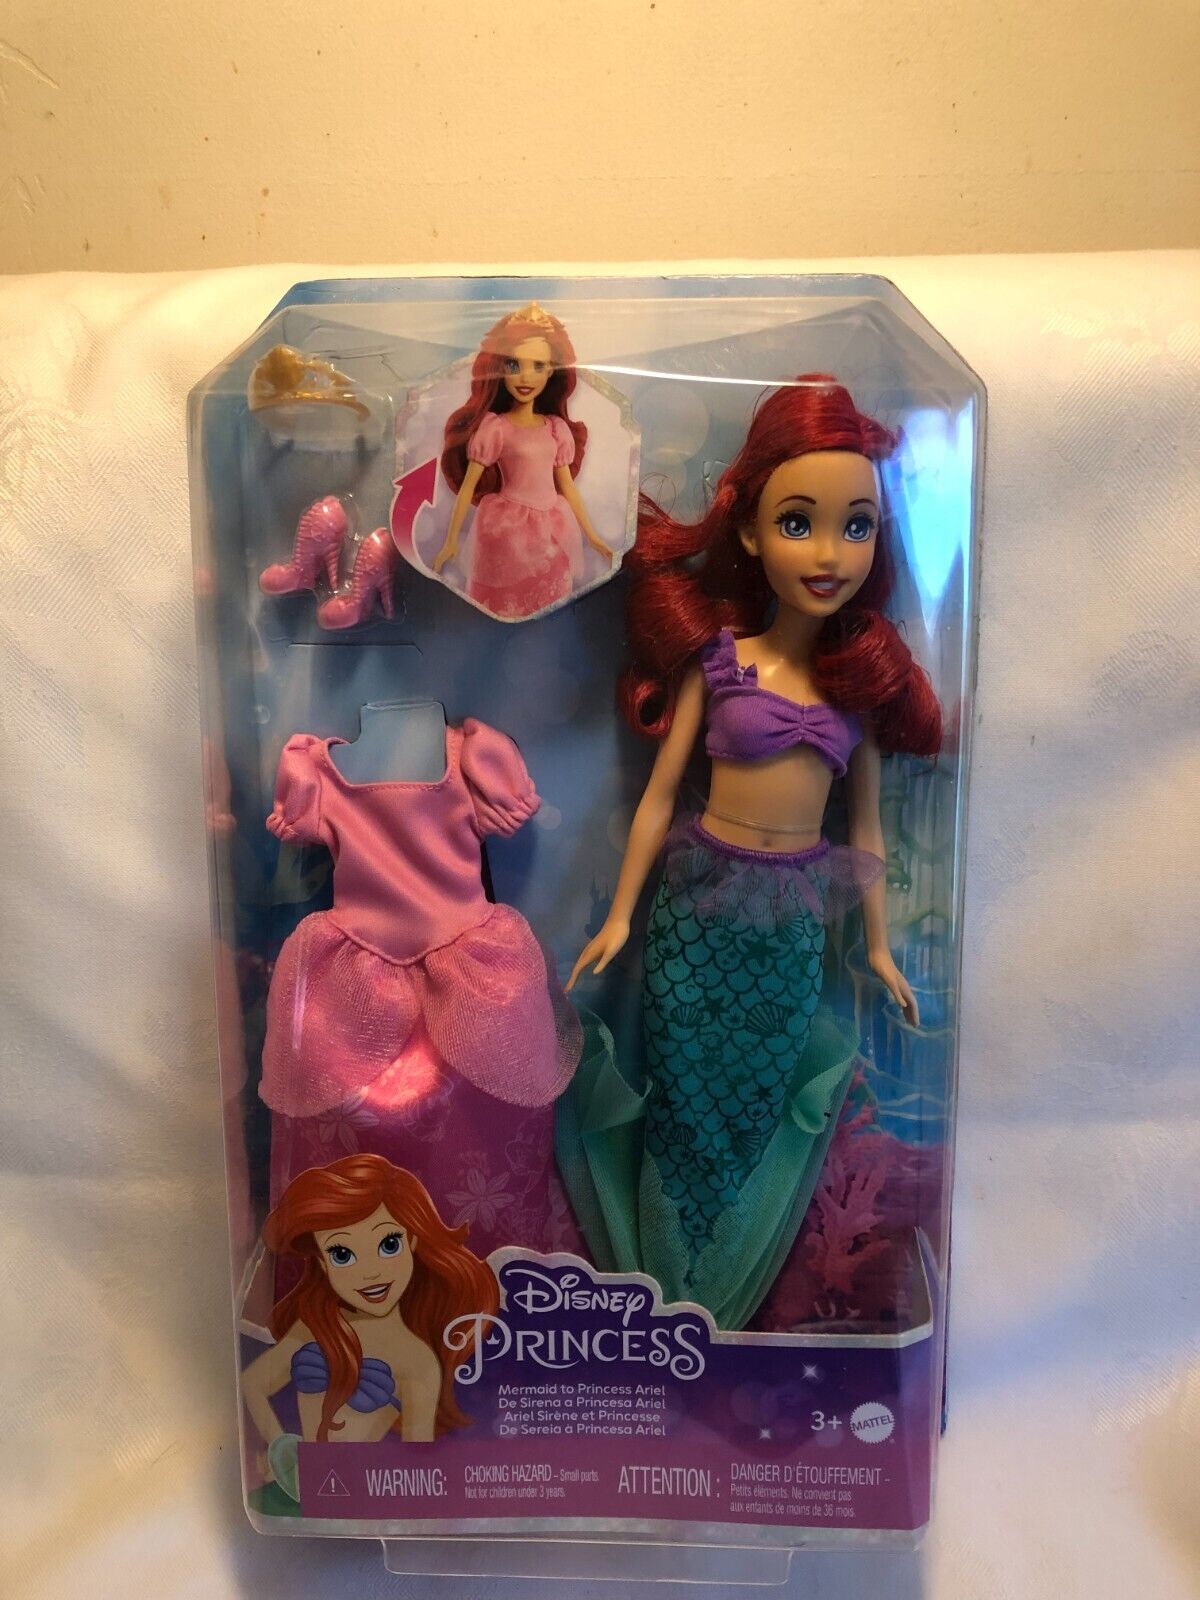 Disney Princess Ariel 2-in-1 Mermaid to Princess Doll New with Box